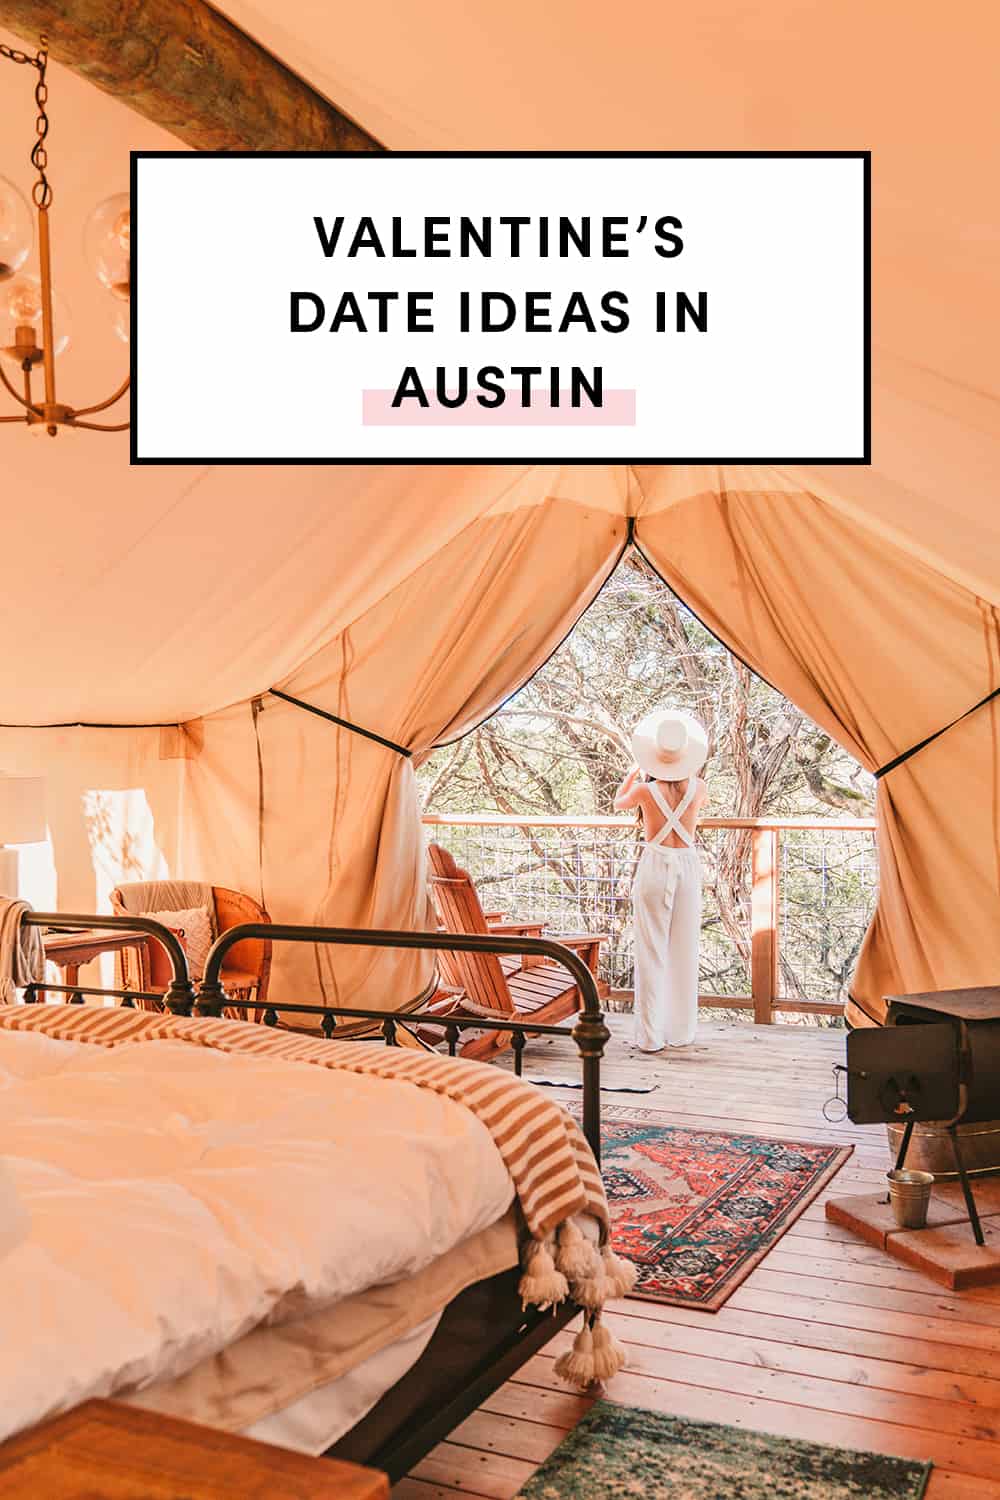 17 Date Ideas For Valentine's Day In Austin (Updated 2023) Koko